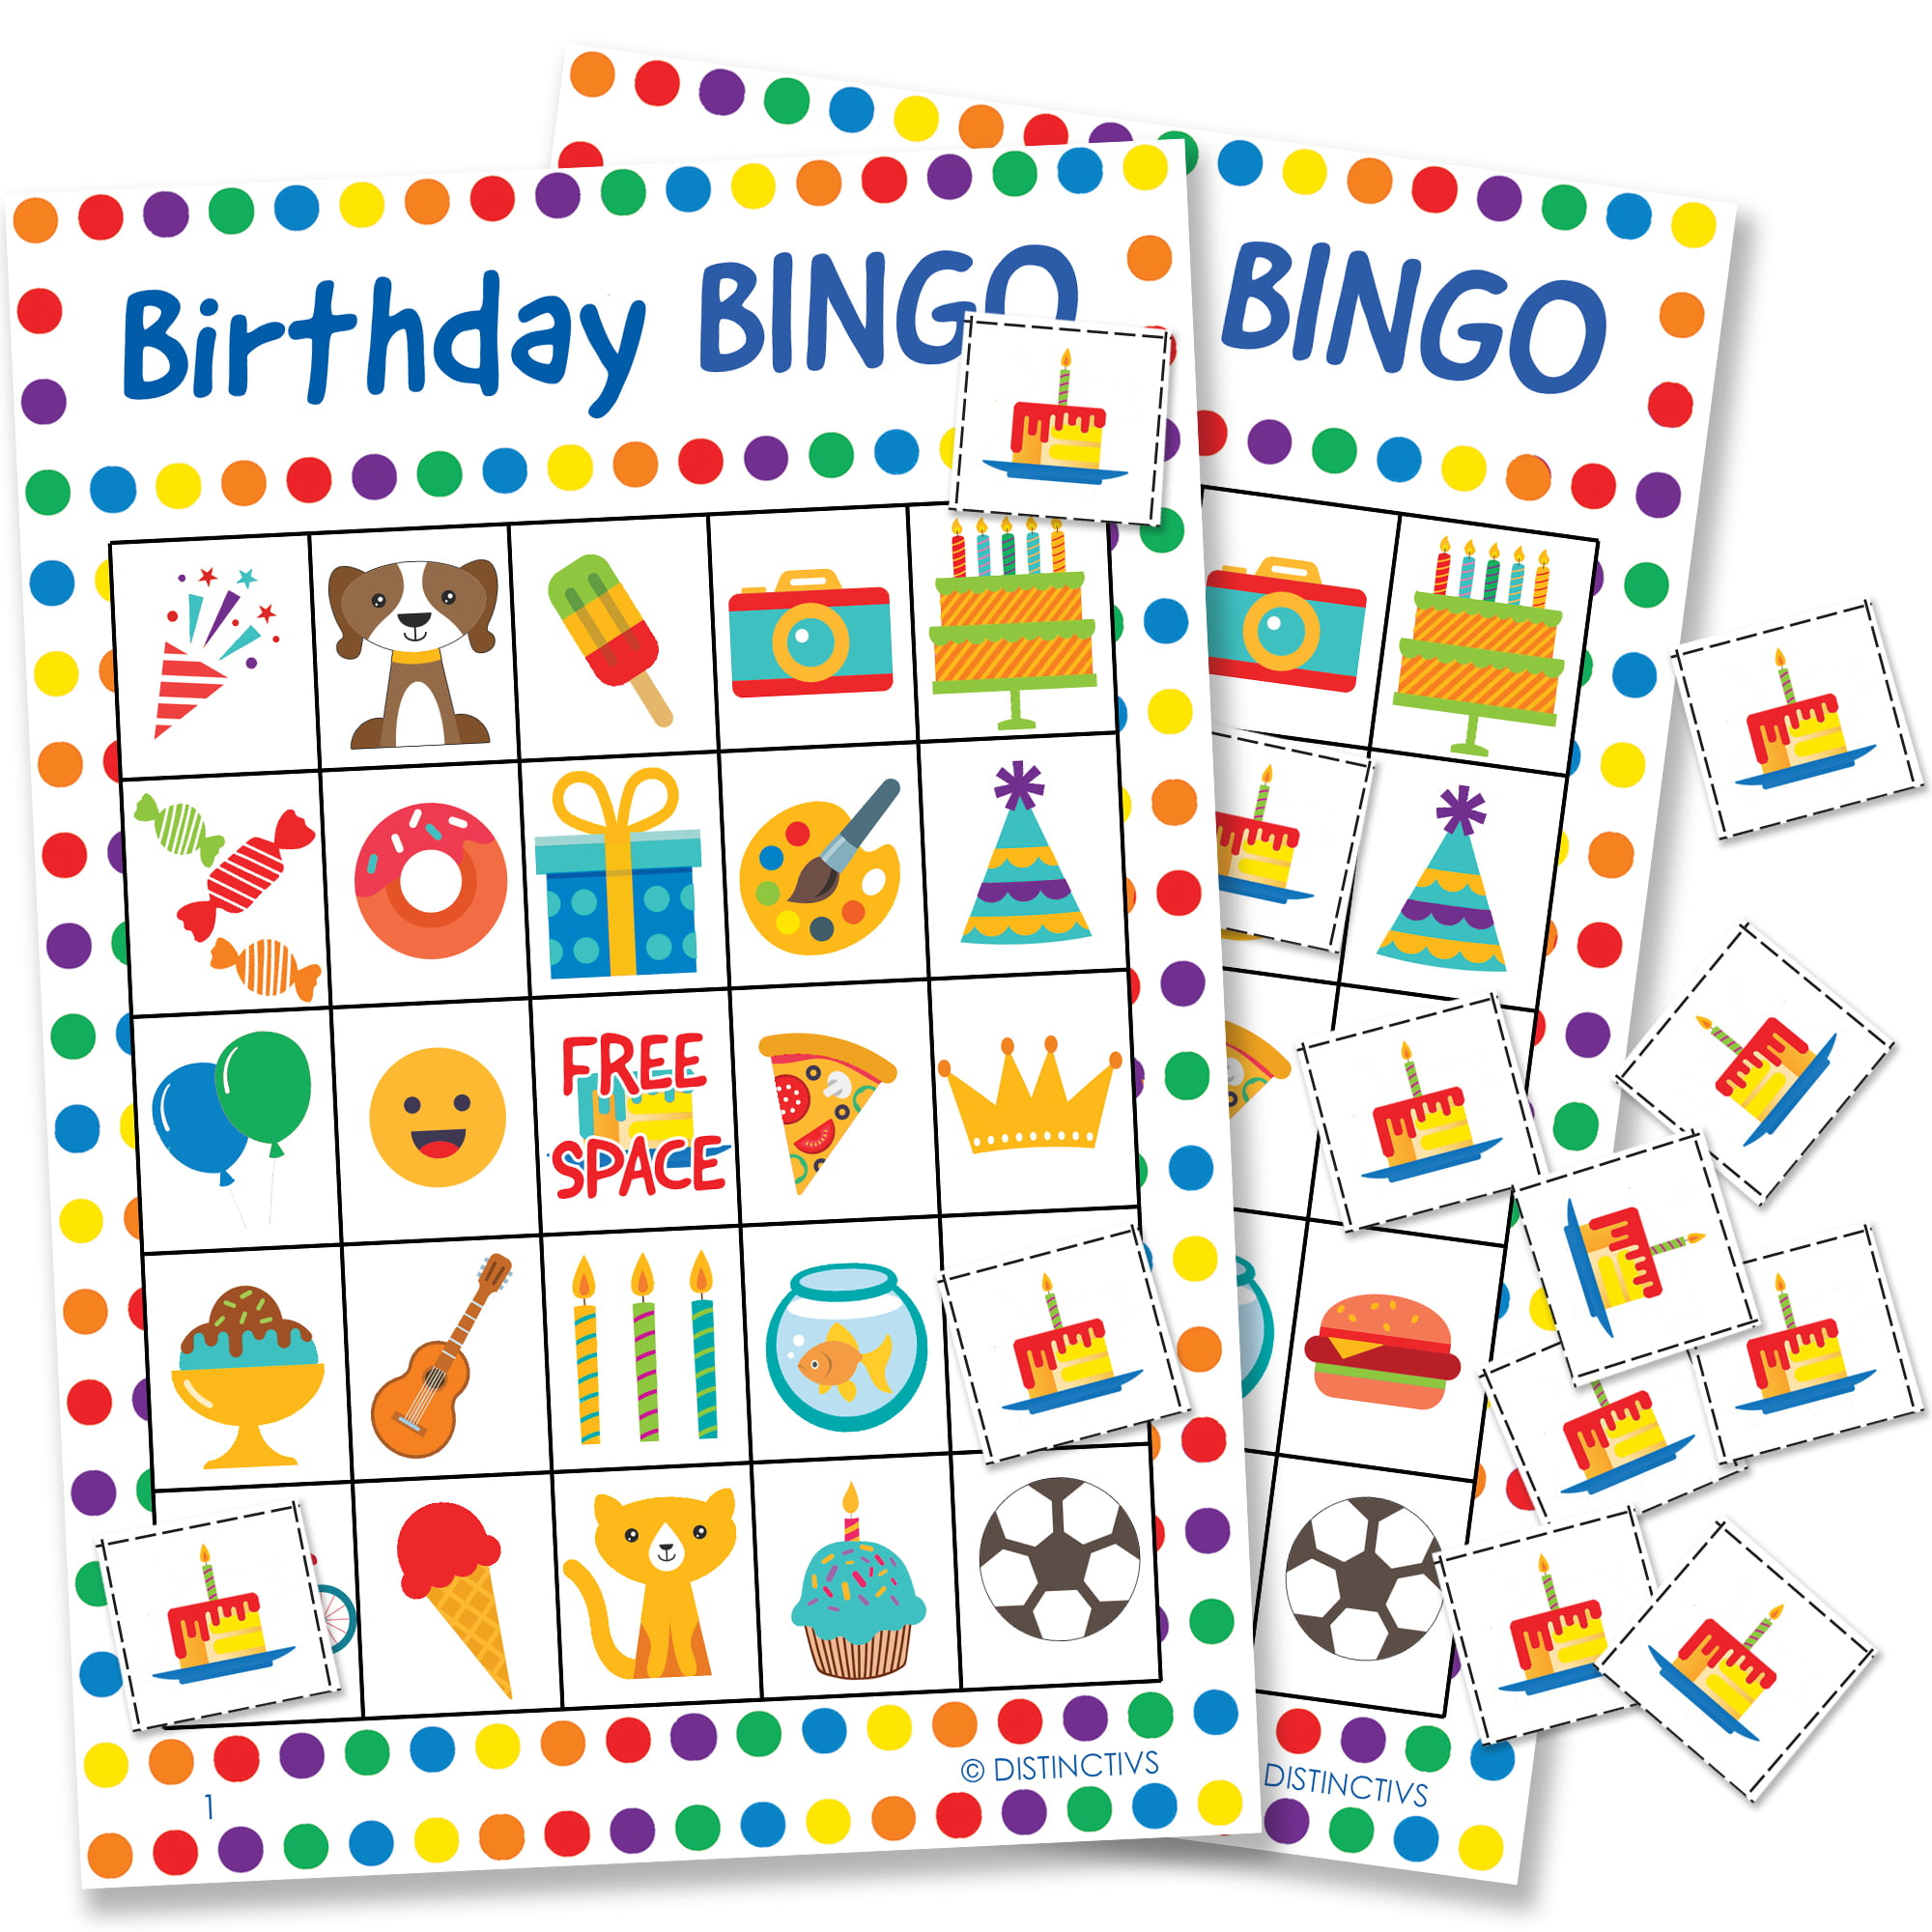 distinctivs-birthday-bingo-game-for-kids-24-players-walmart